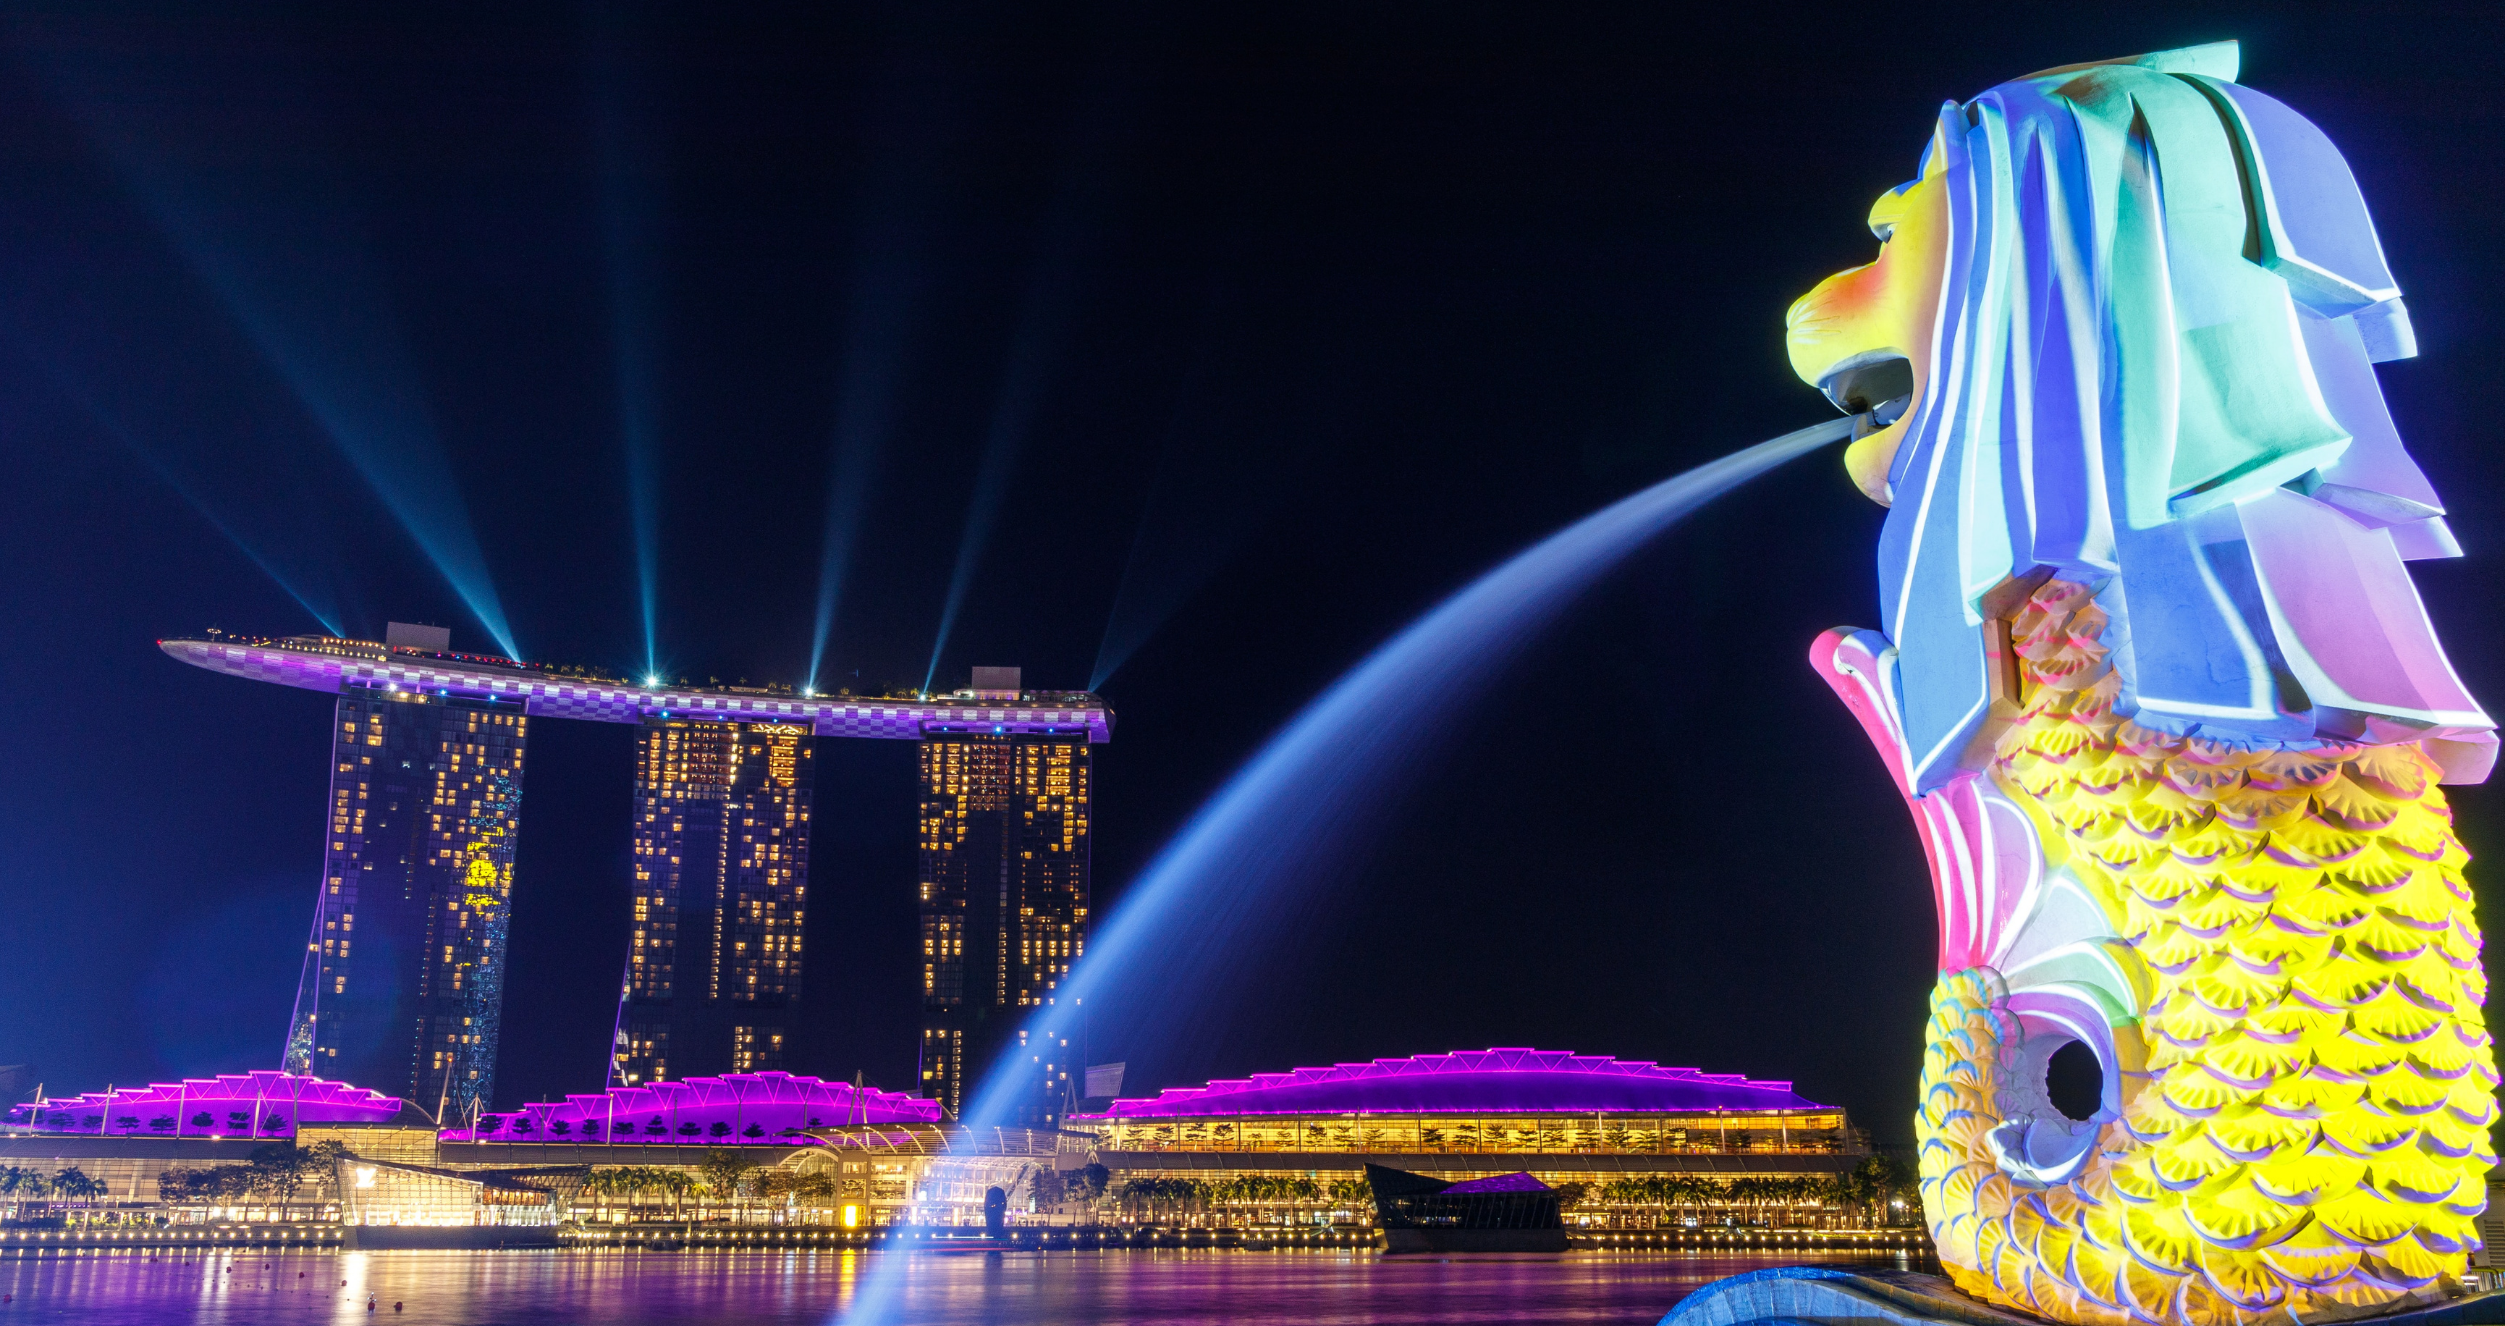 Singapore's landmarks are lit up at night.